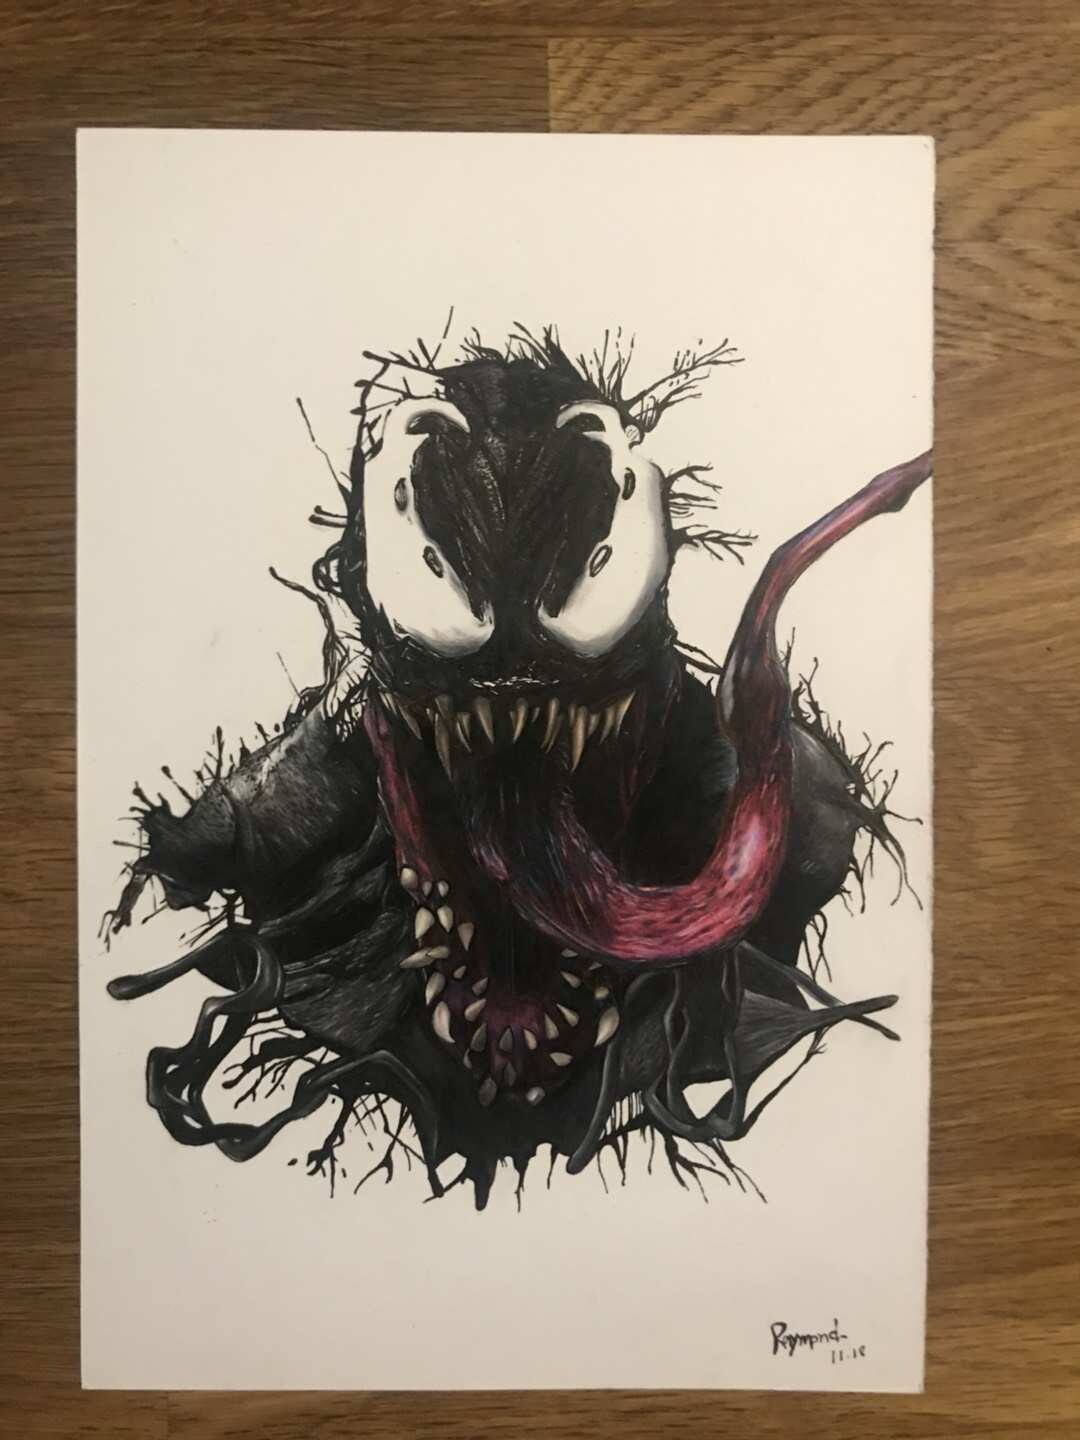 ArtStation - Venom color pencil drawing, Raymond Deming